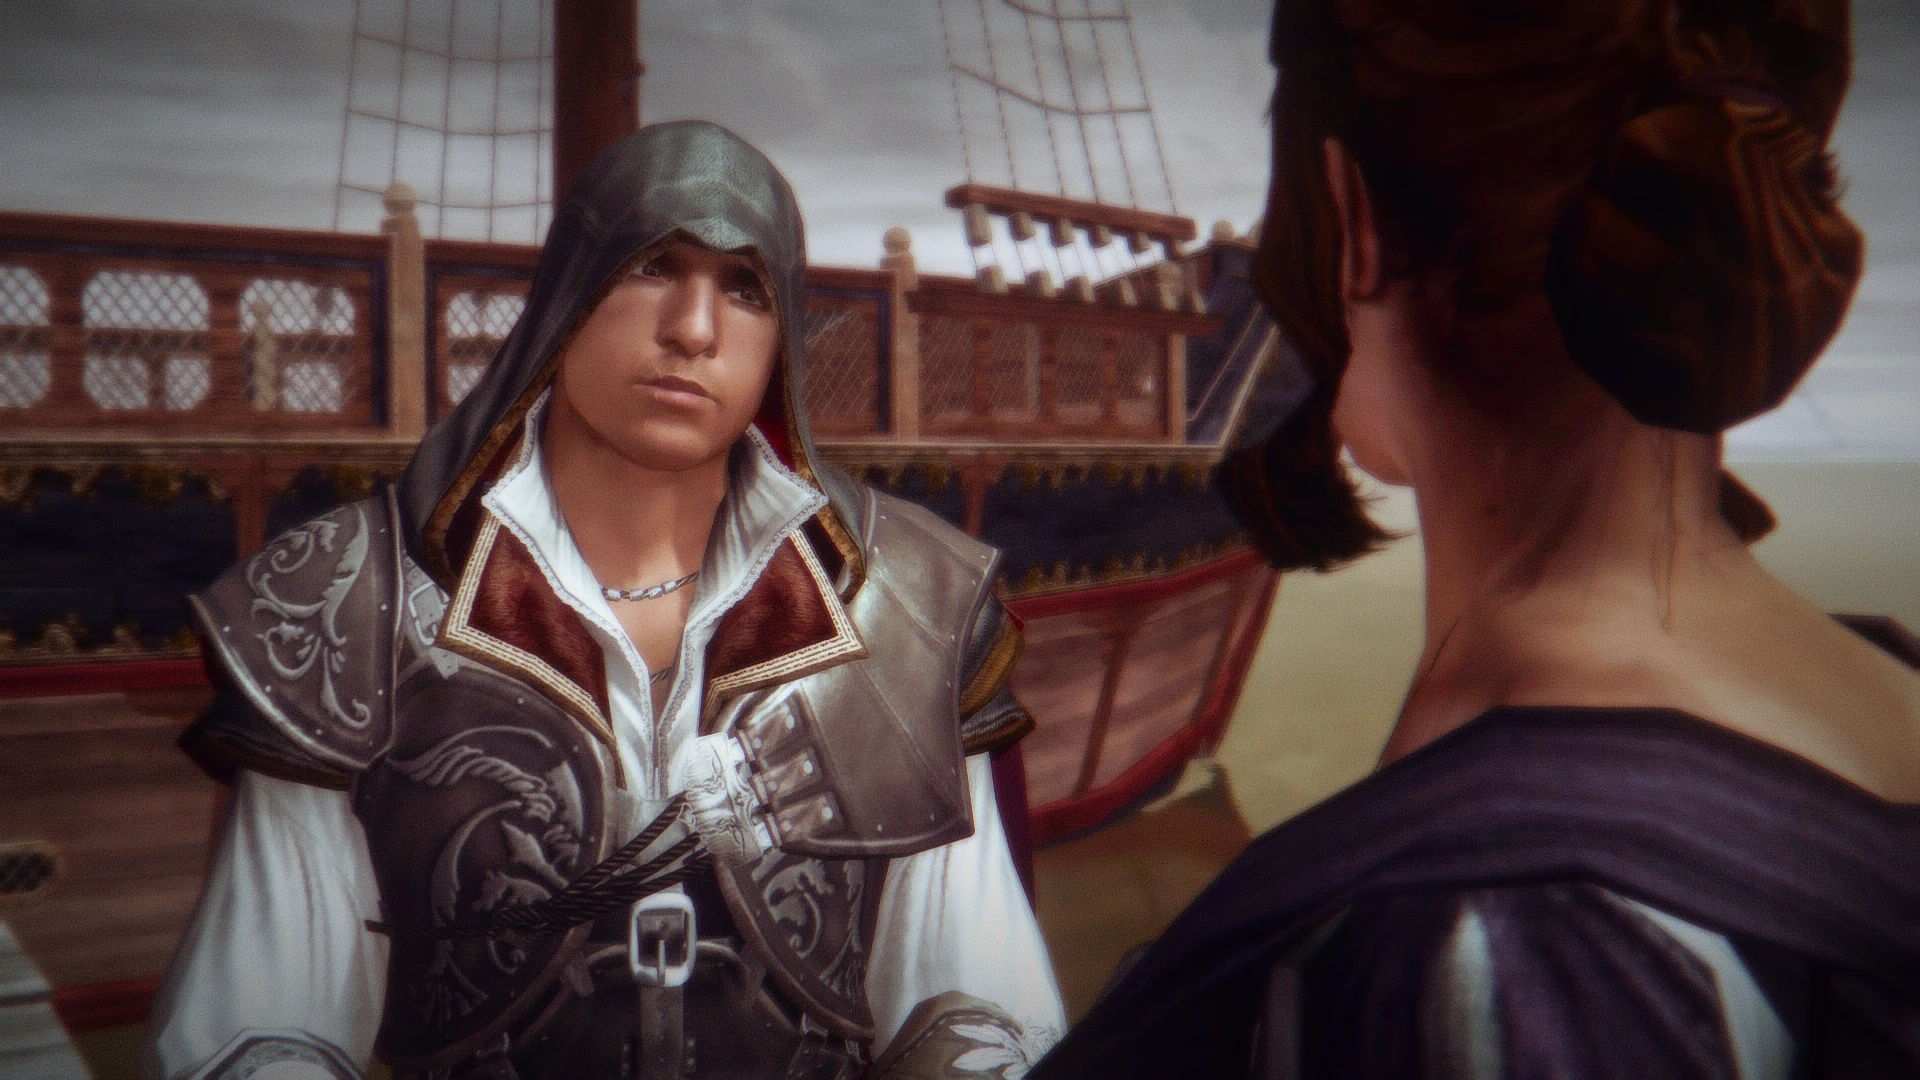 Assassin's Creed: Revelations Nexus - Mods and community